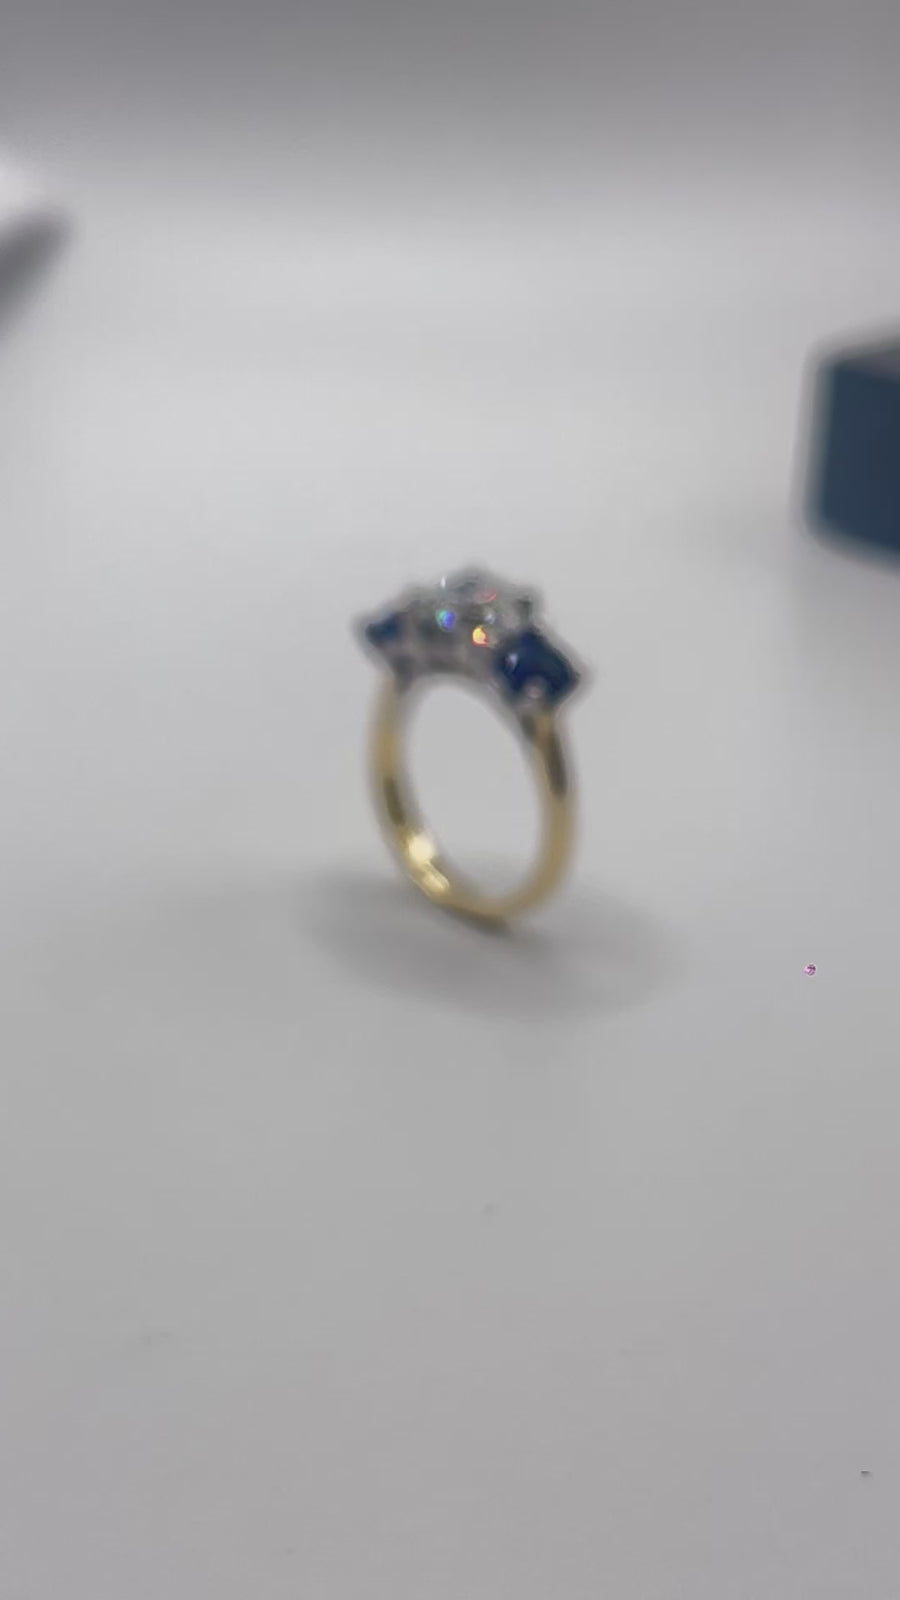 Sapphire & Diamond Trilogy Ring